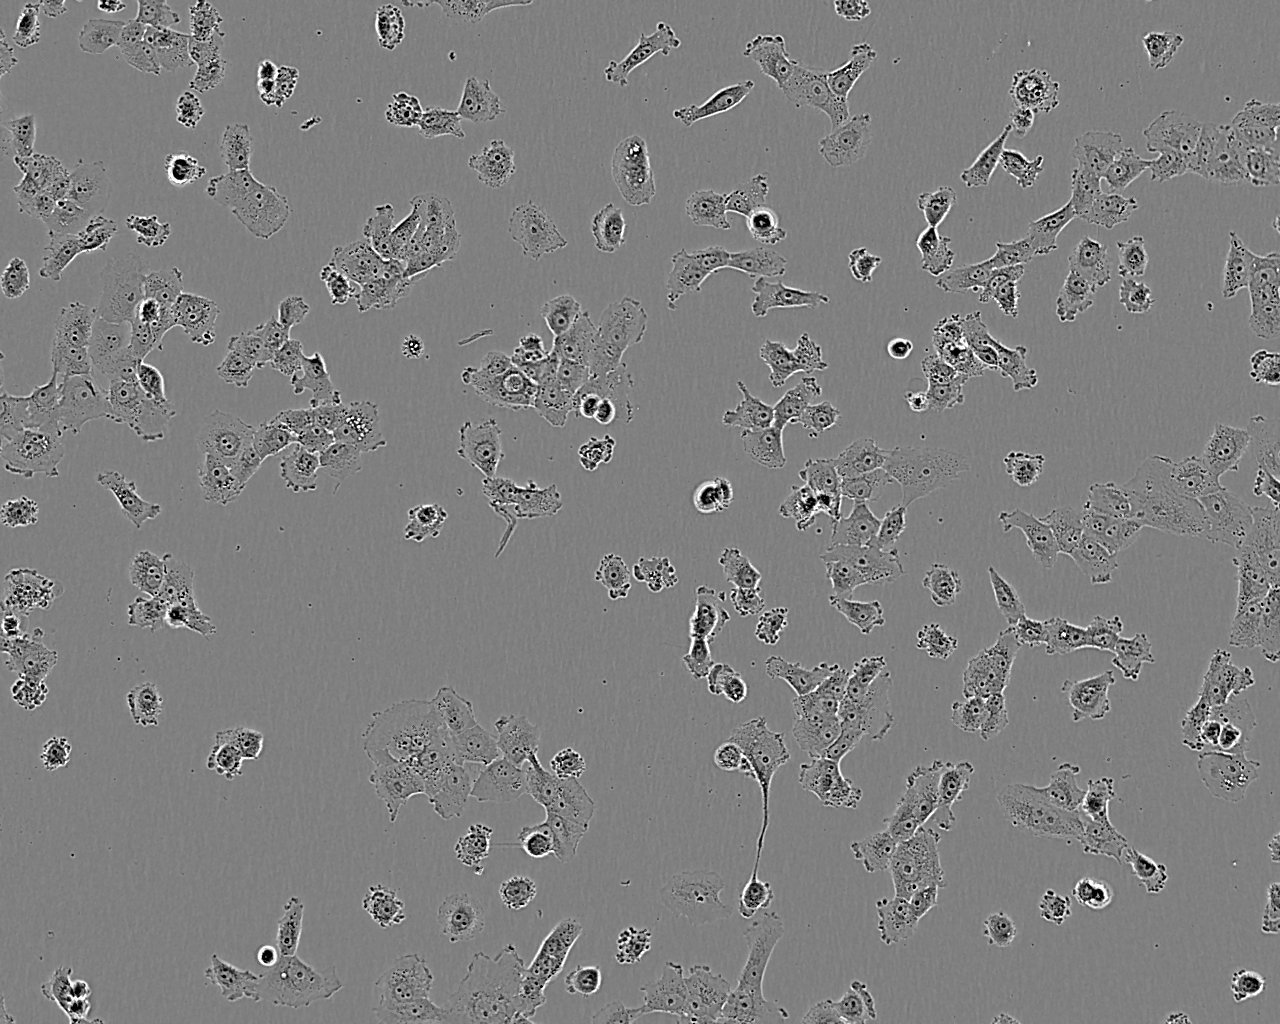 NCI-H1876 epithelioid cells人小细胞肺癌细胞系,NCI-H1876 epithelioid cells